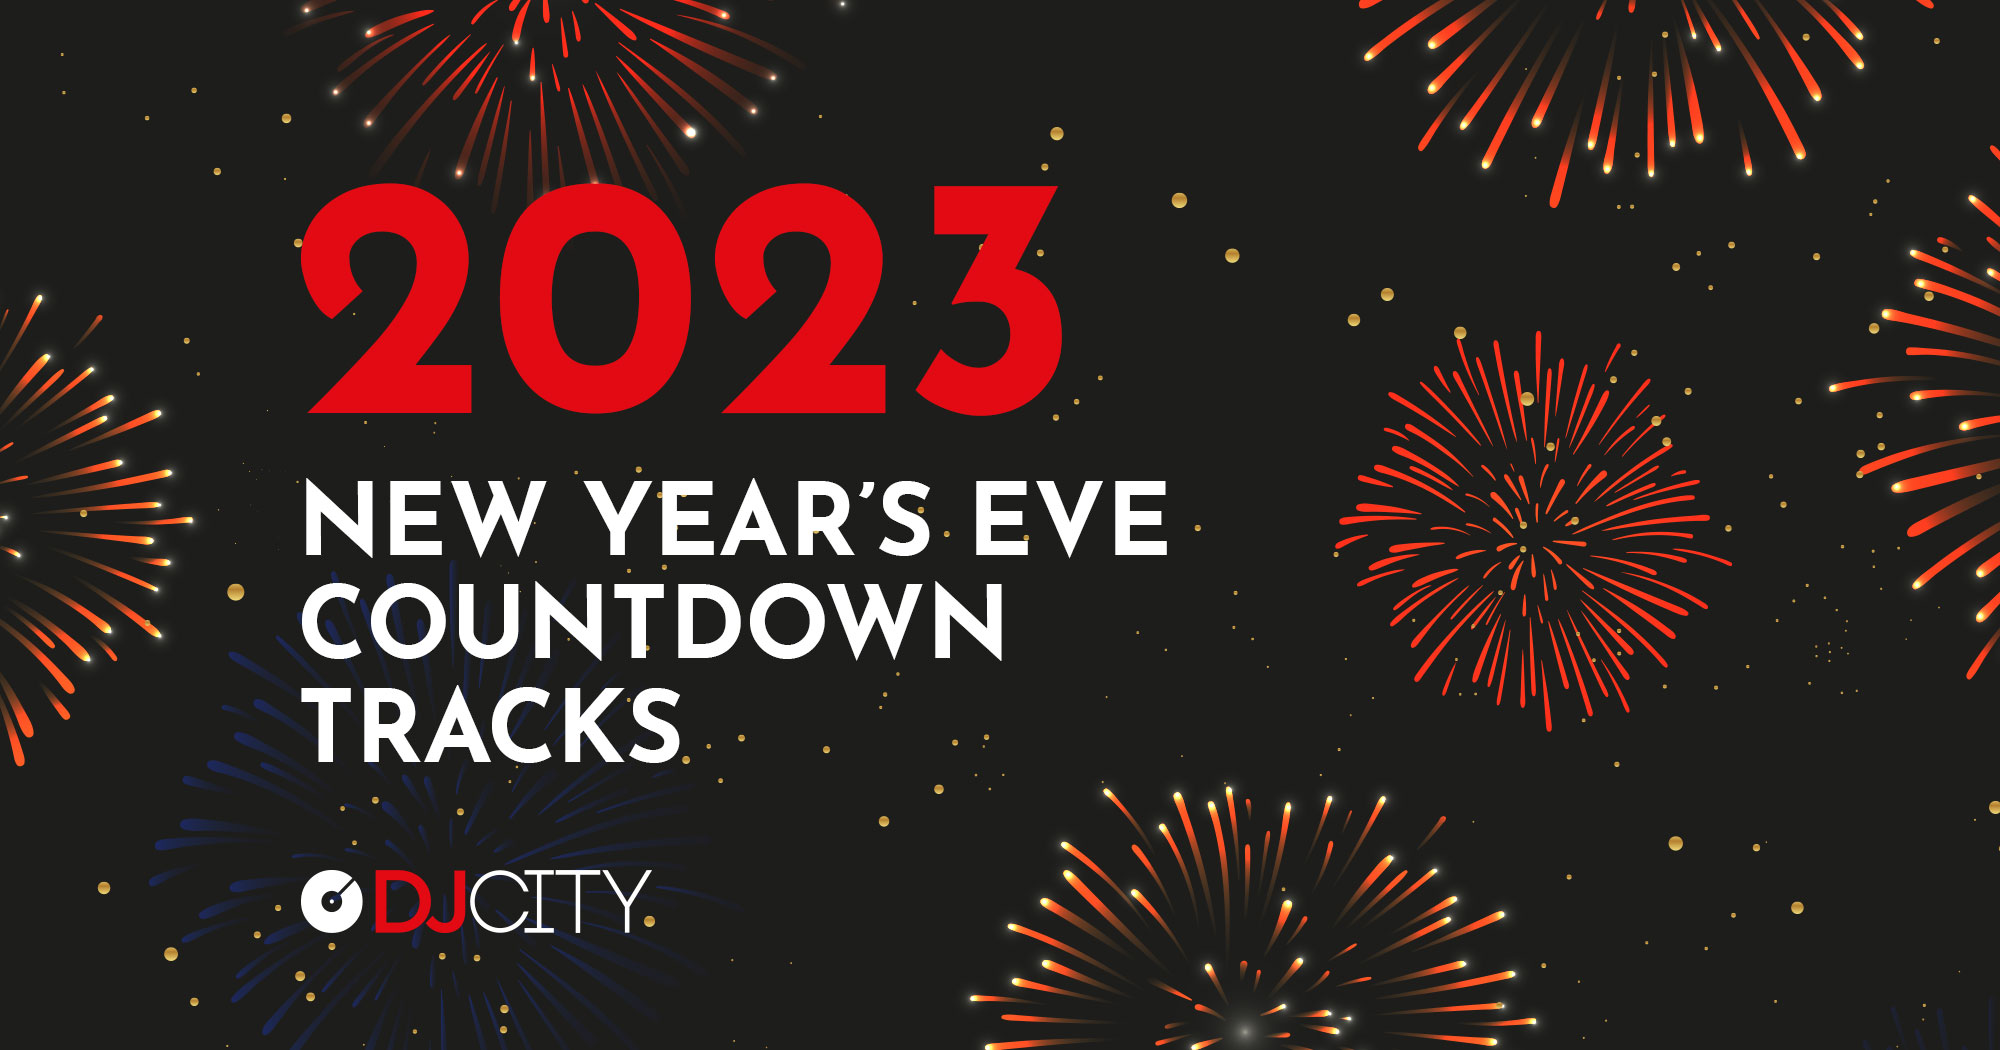 New Year’s Eve 2023 Countdown Tracks